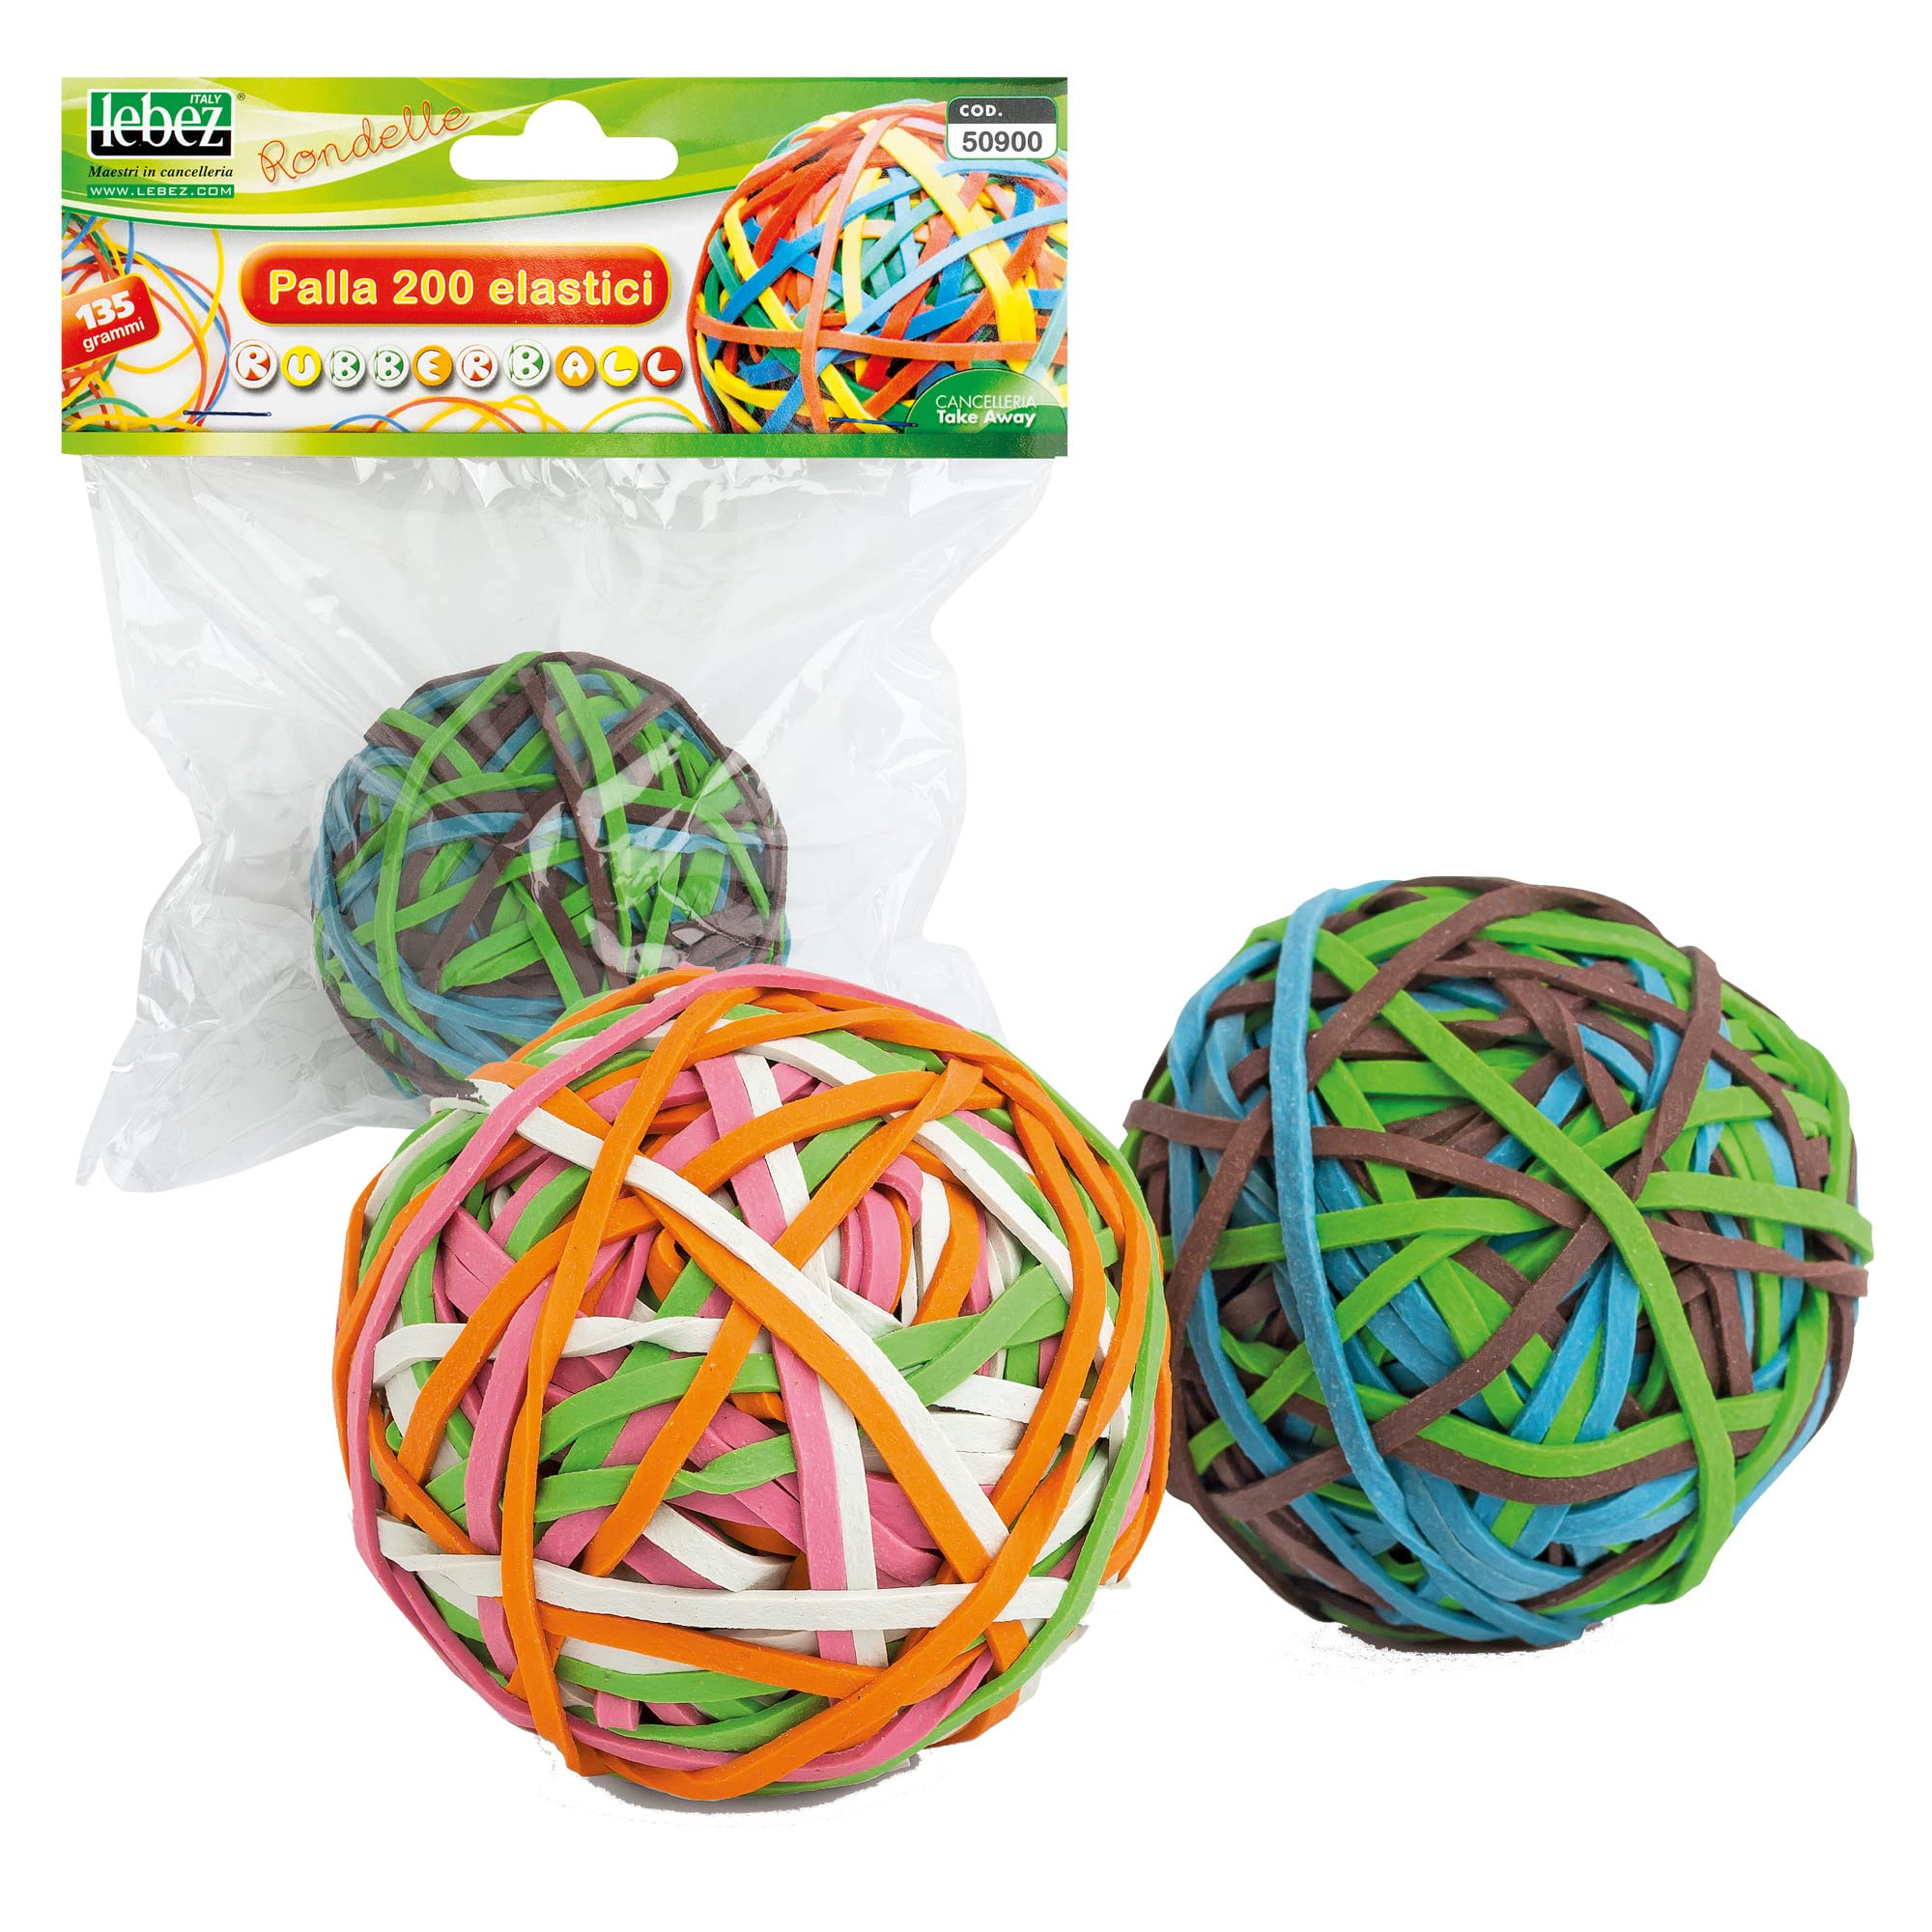 Elastici - D 5 cm - colori assortiti - Lebez - sfera da 200 elastici